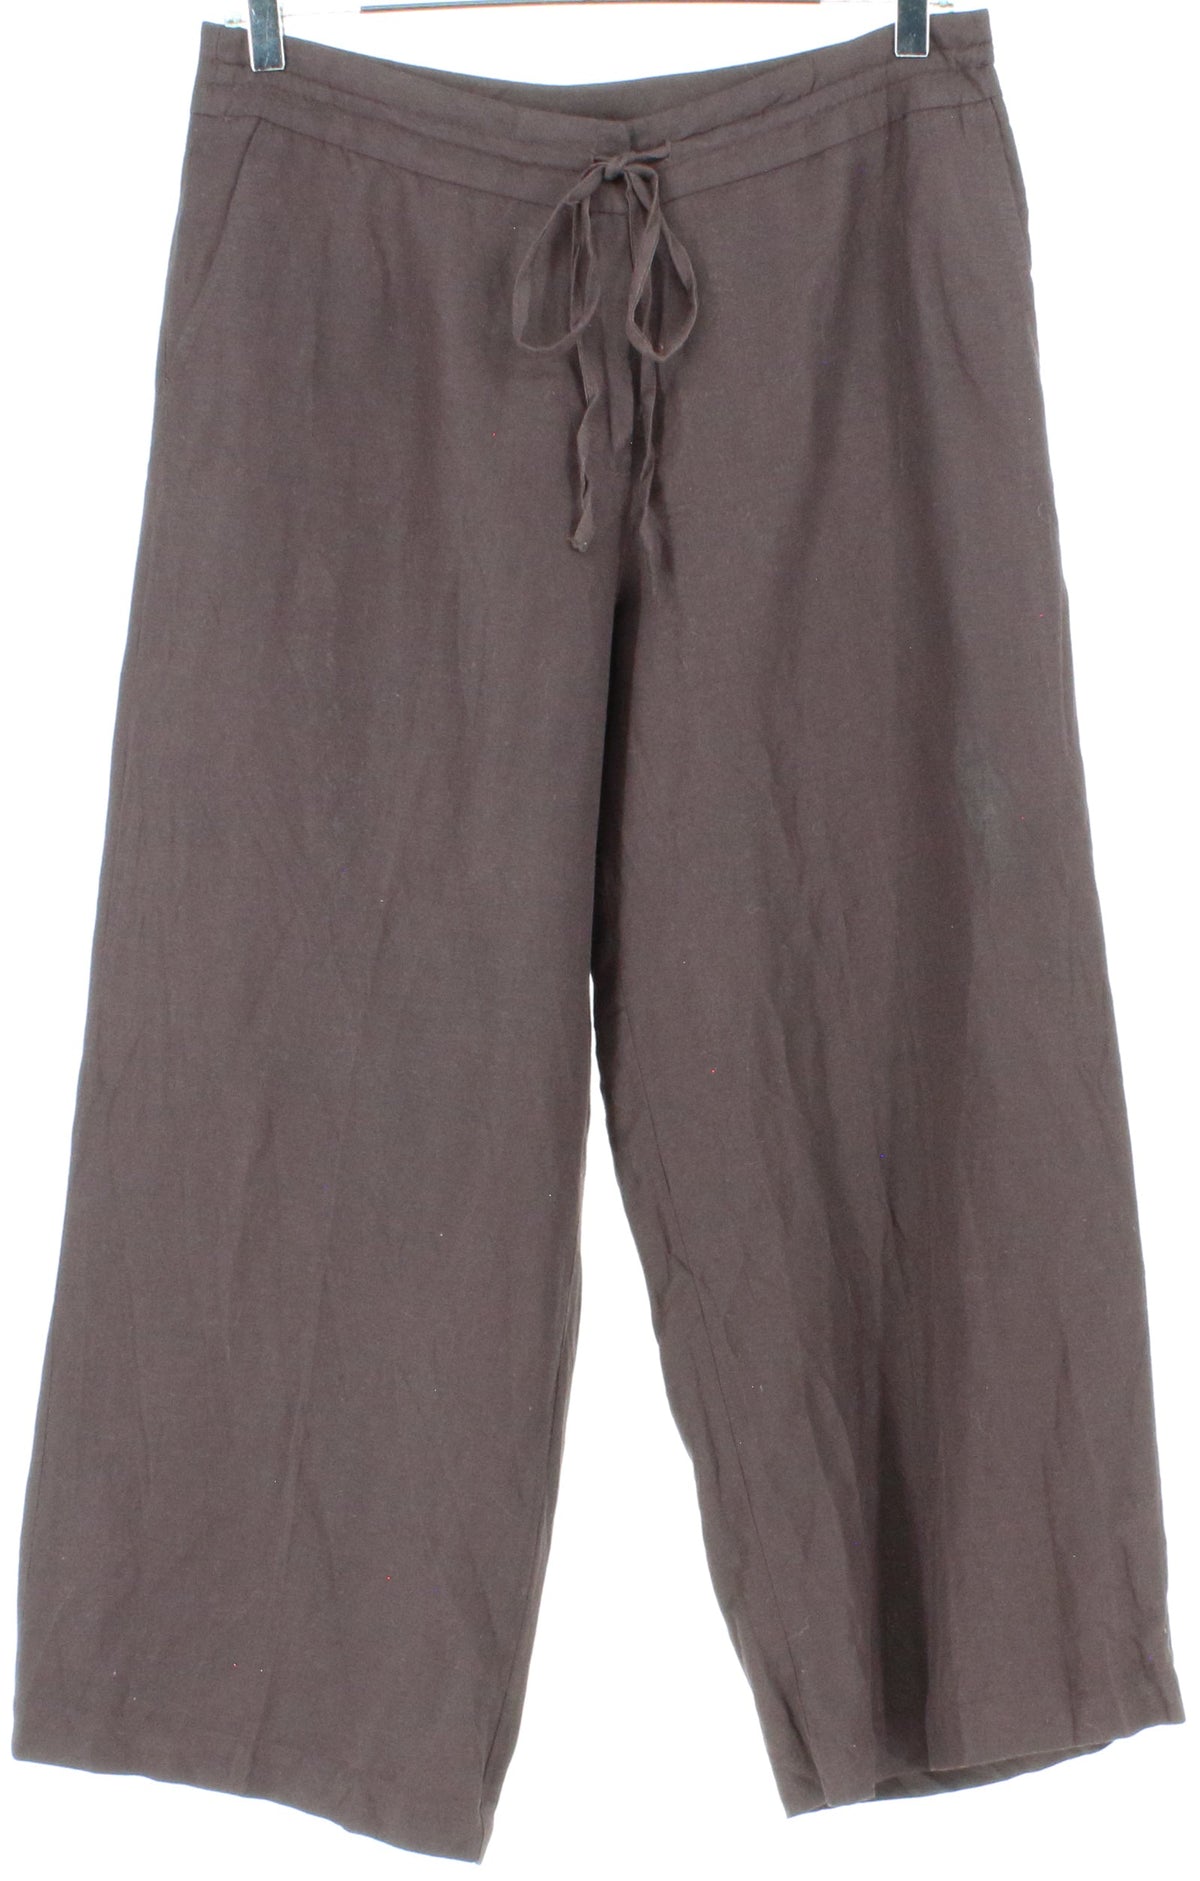 New York & Company Dark Brown Linen Pants